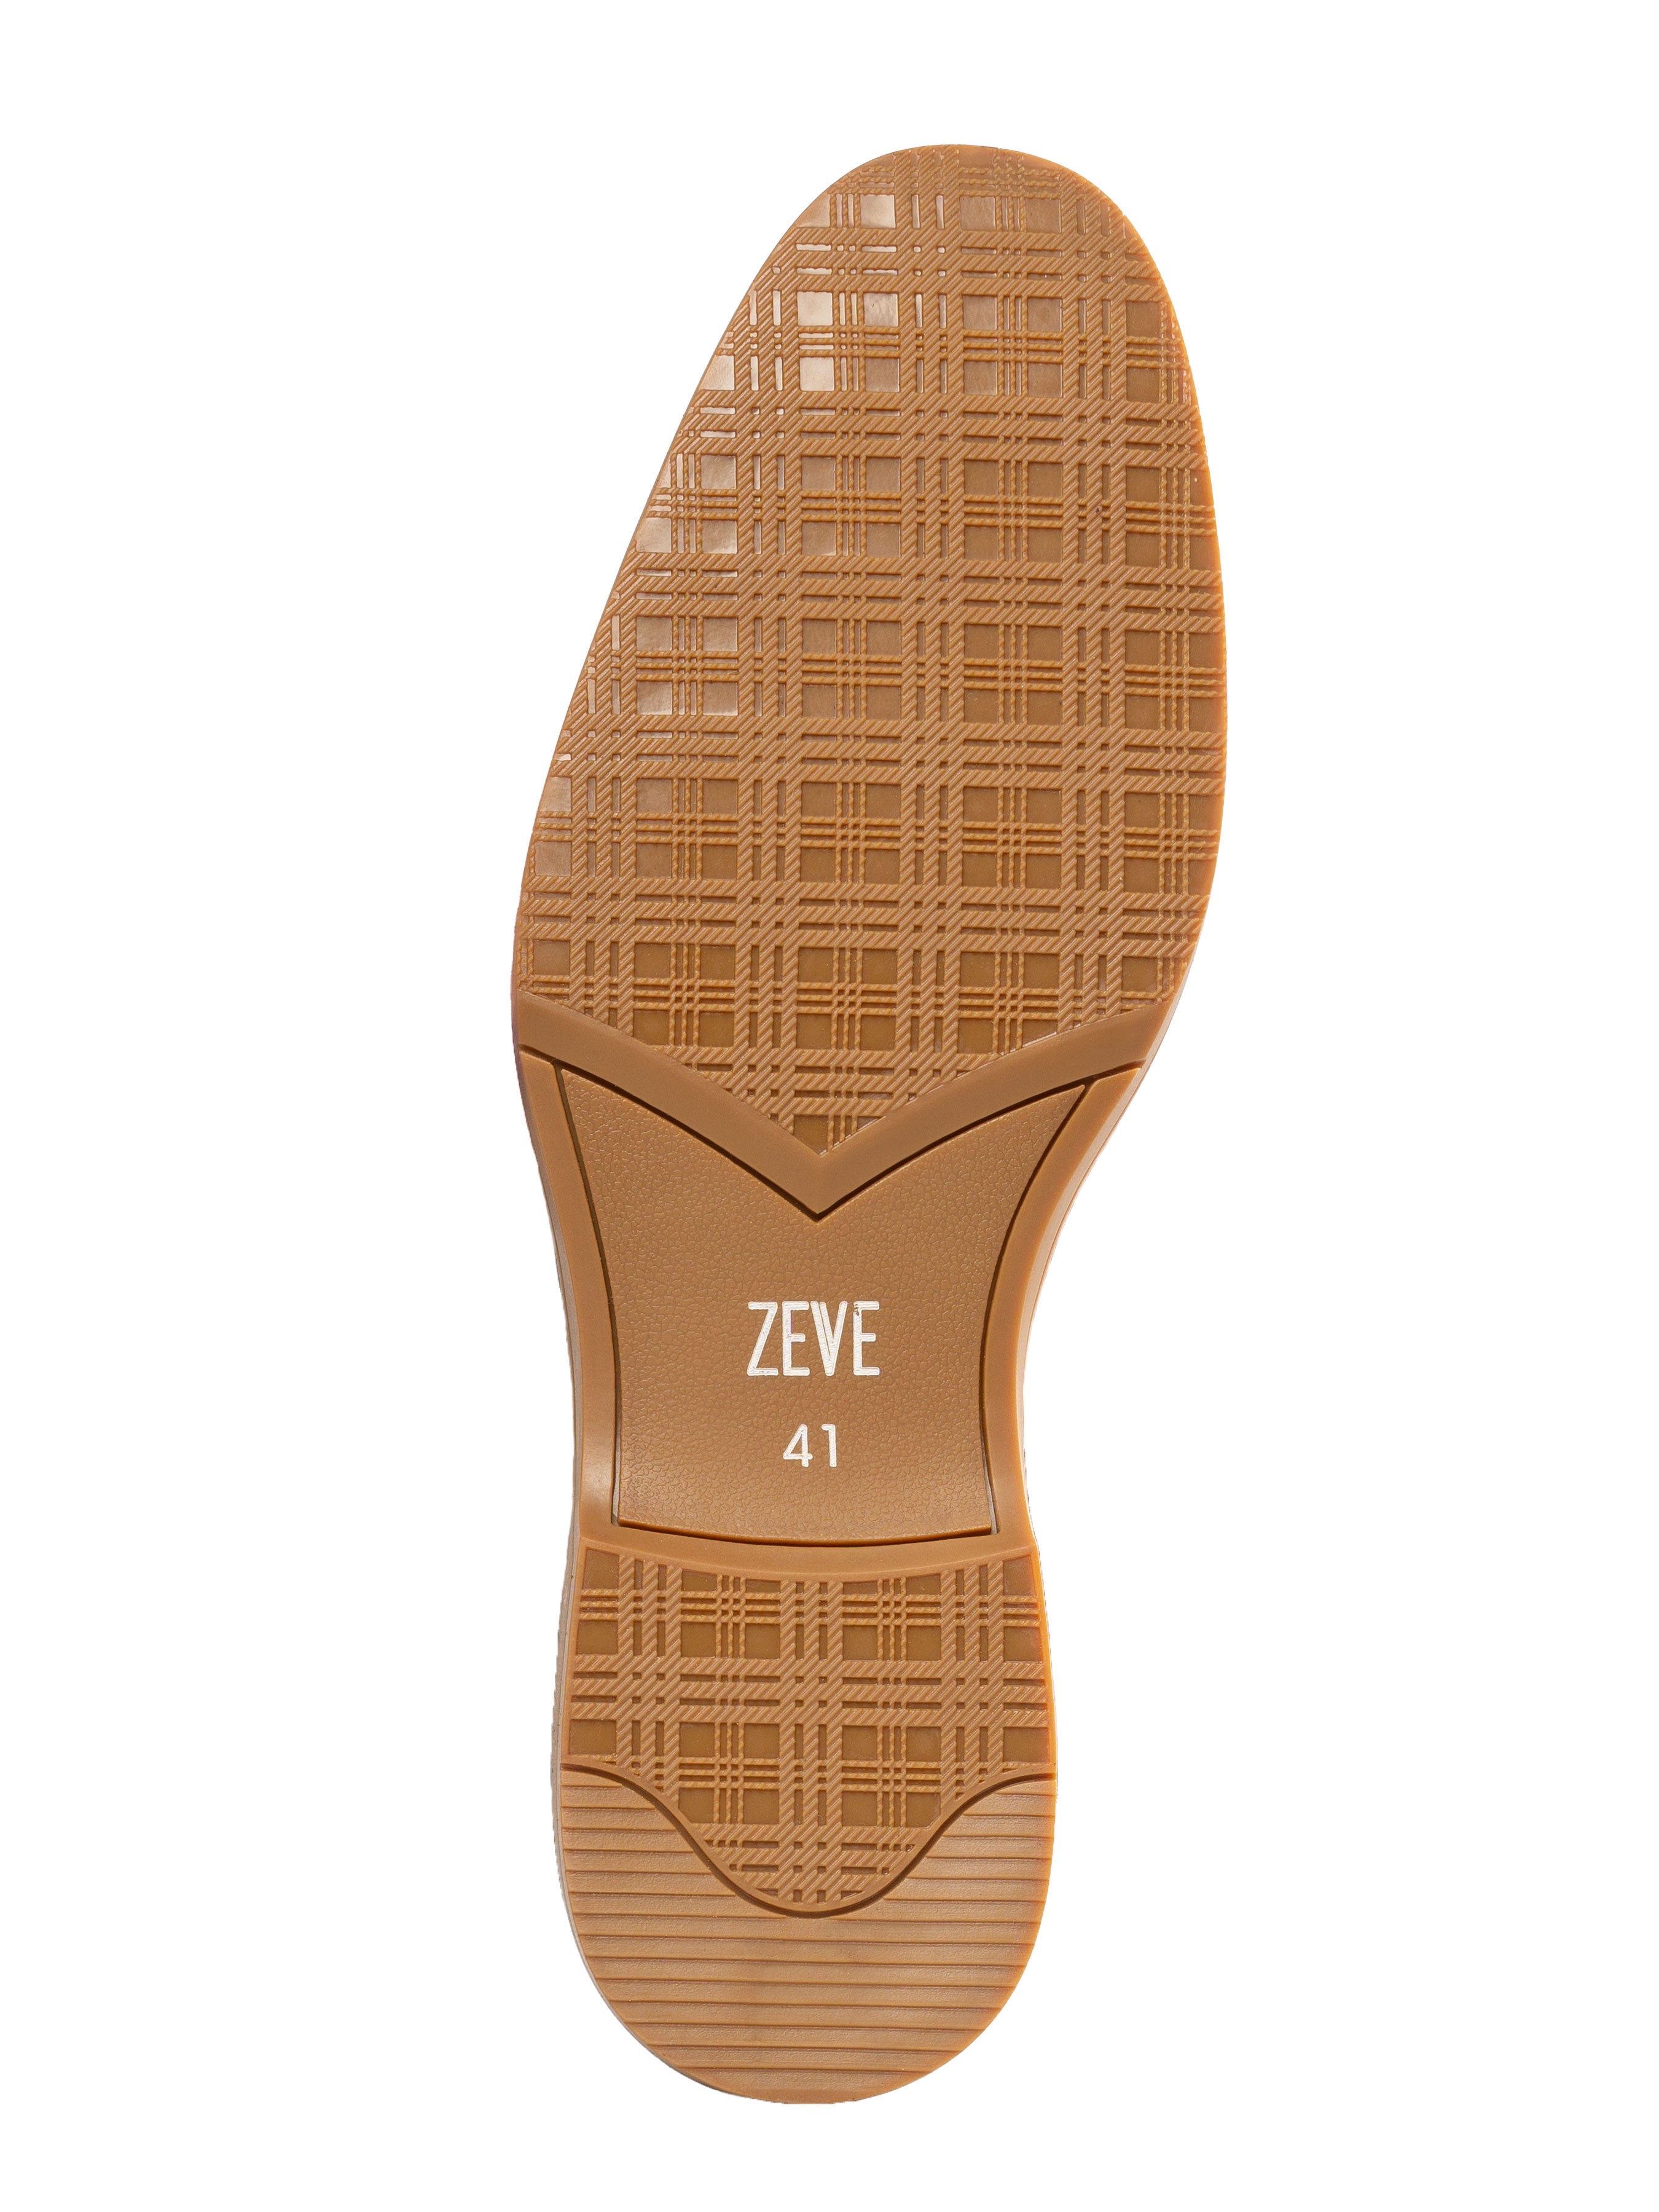 Belgian Loafer Tassel - Maroon Suede Leather (Soflex Sole) - Zeve Shoes